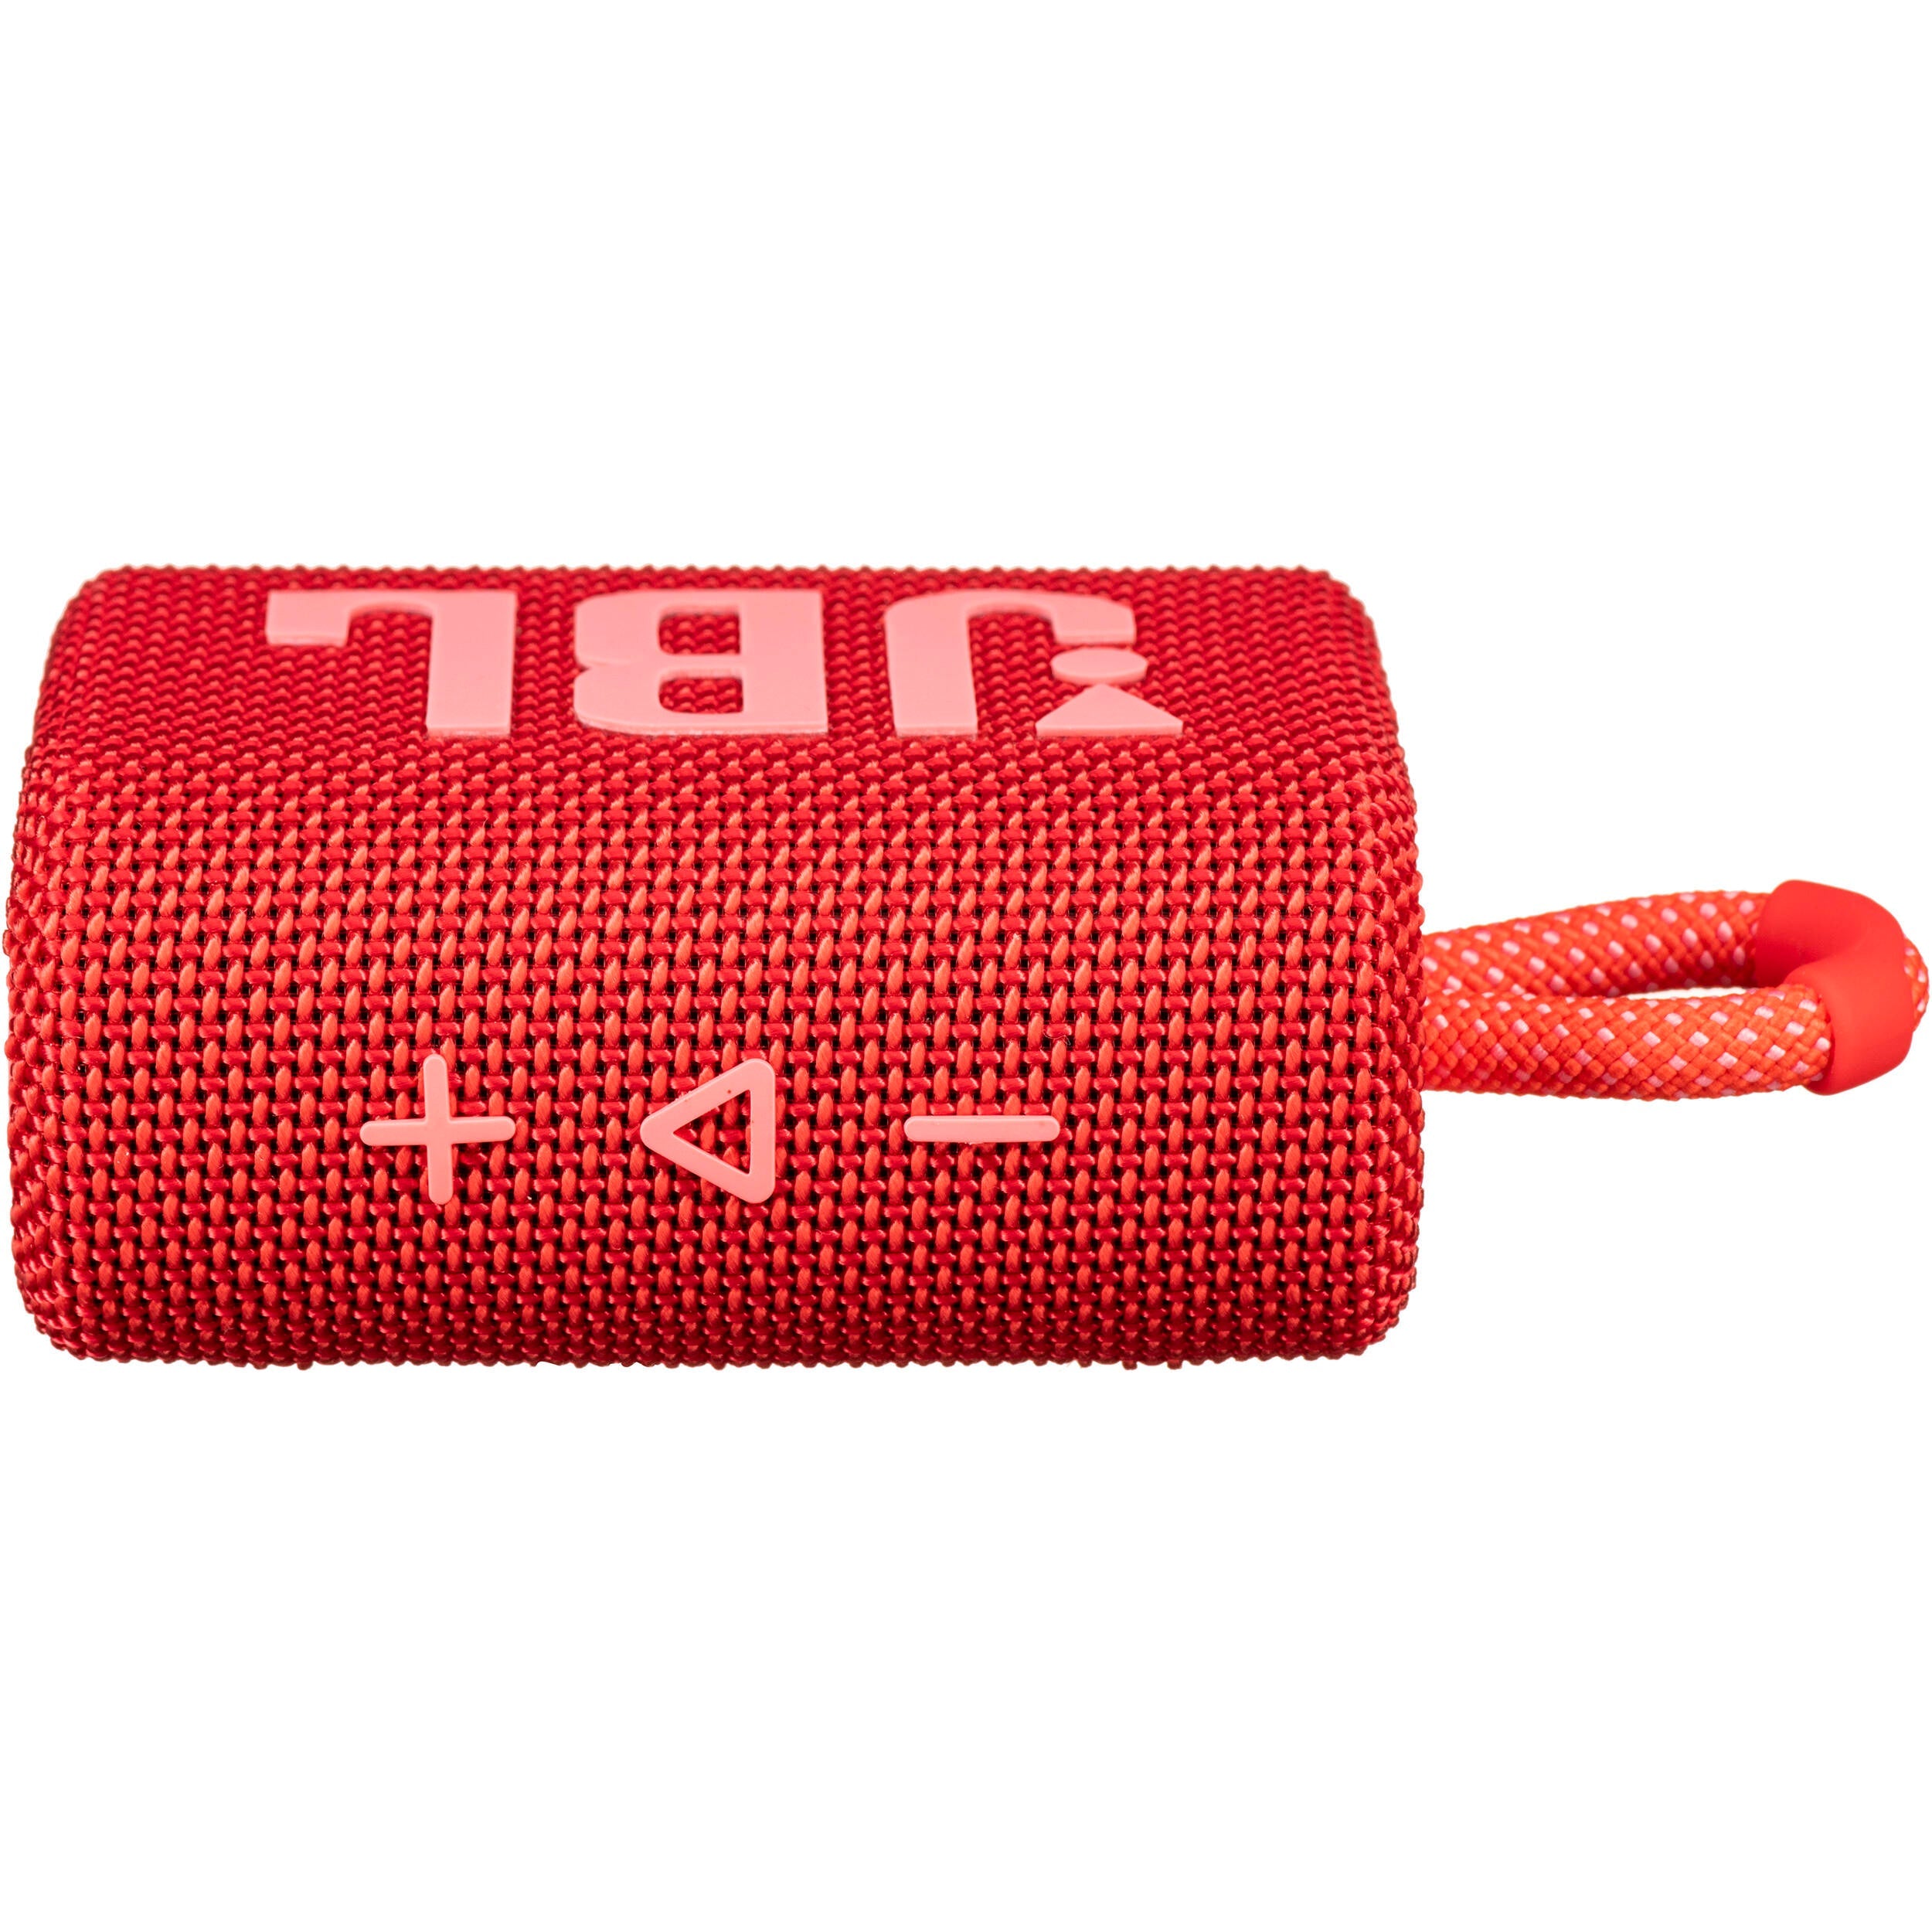 JBL Go 3 Portable Bluetooth Wireless Speaker - Certified Refurbished